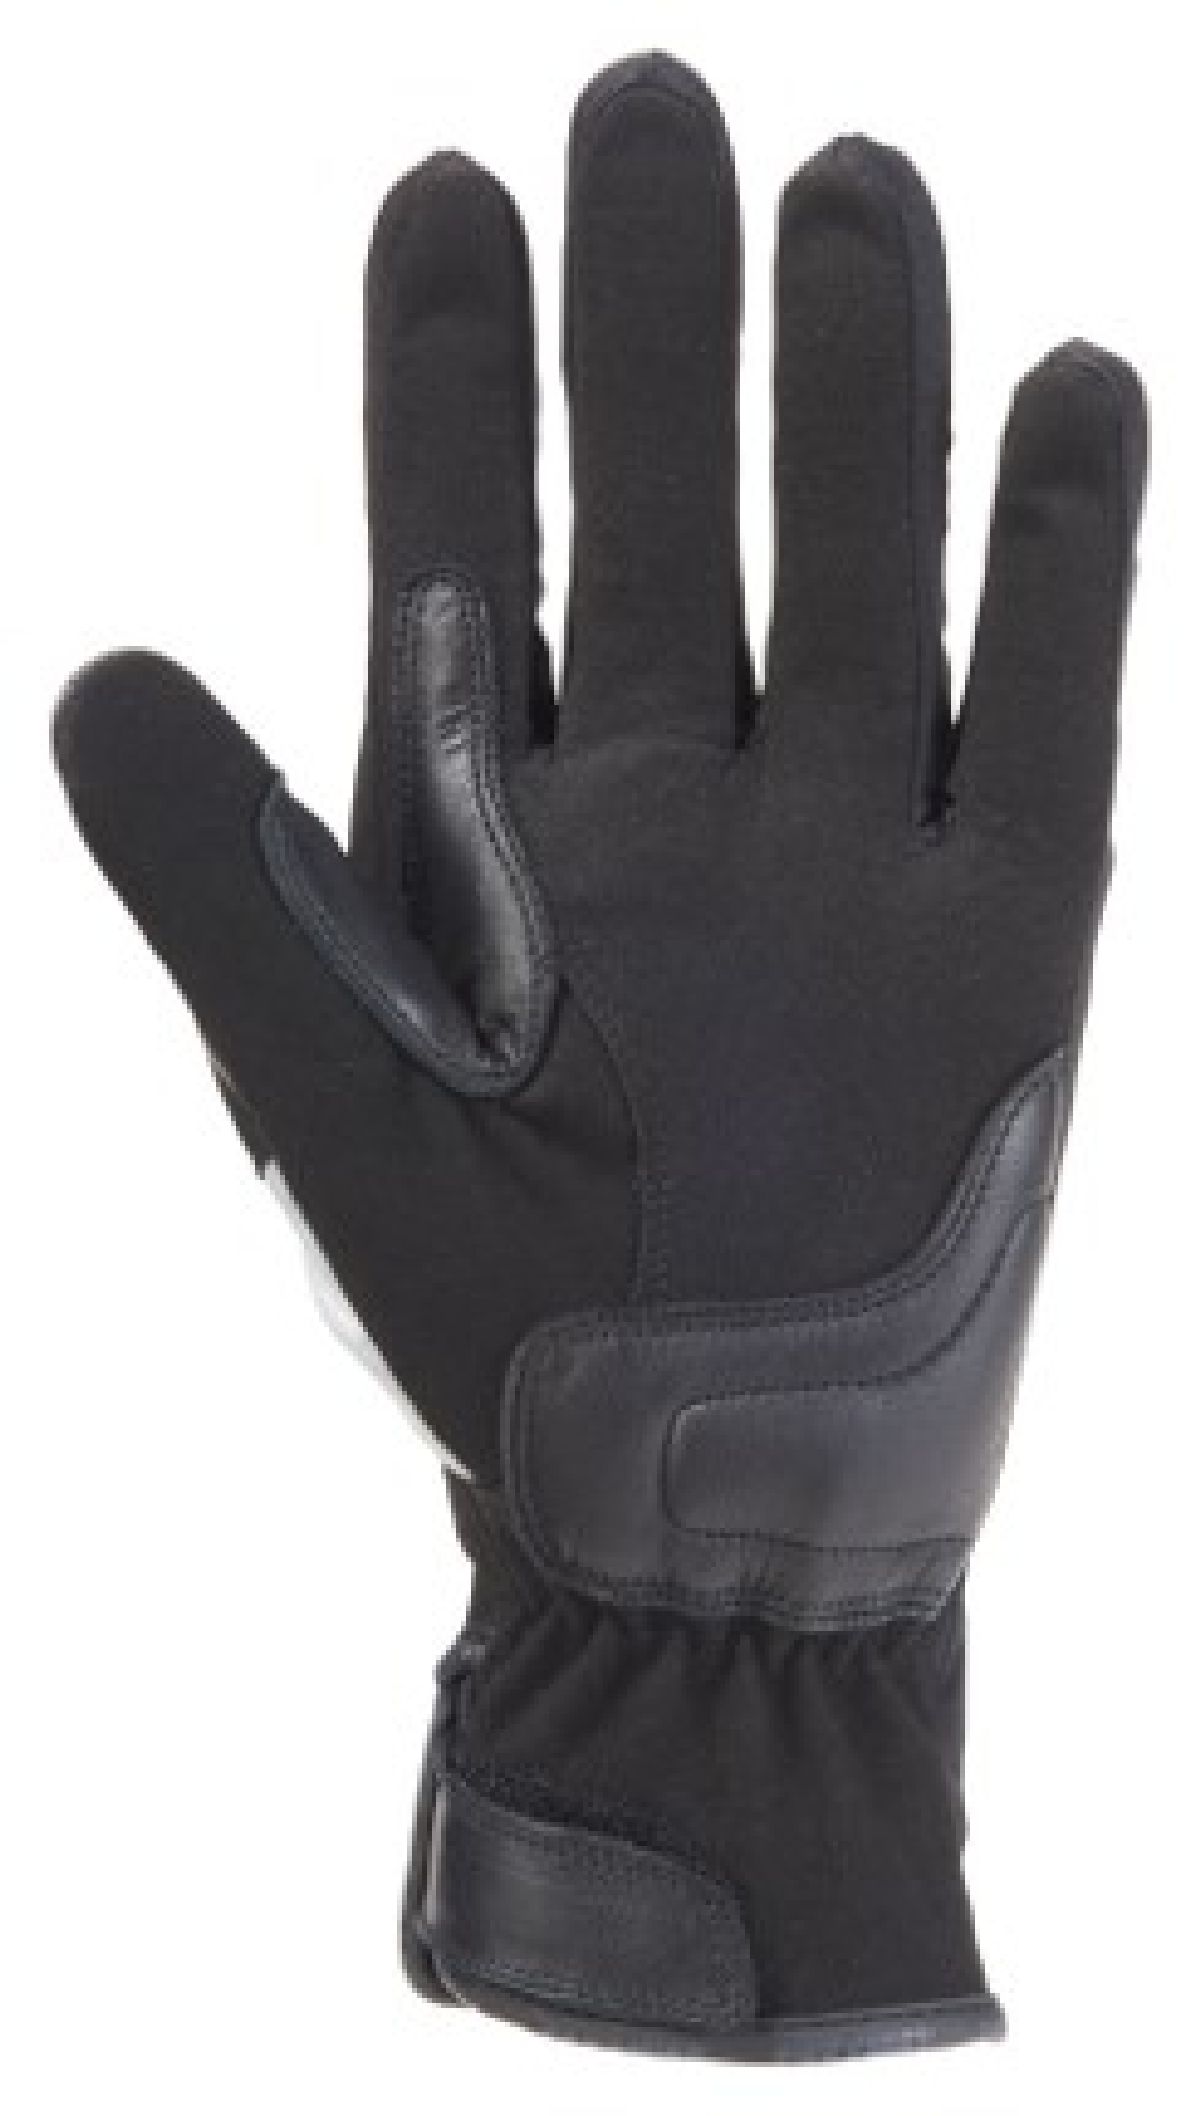 Easy II gants Noir/Gris M